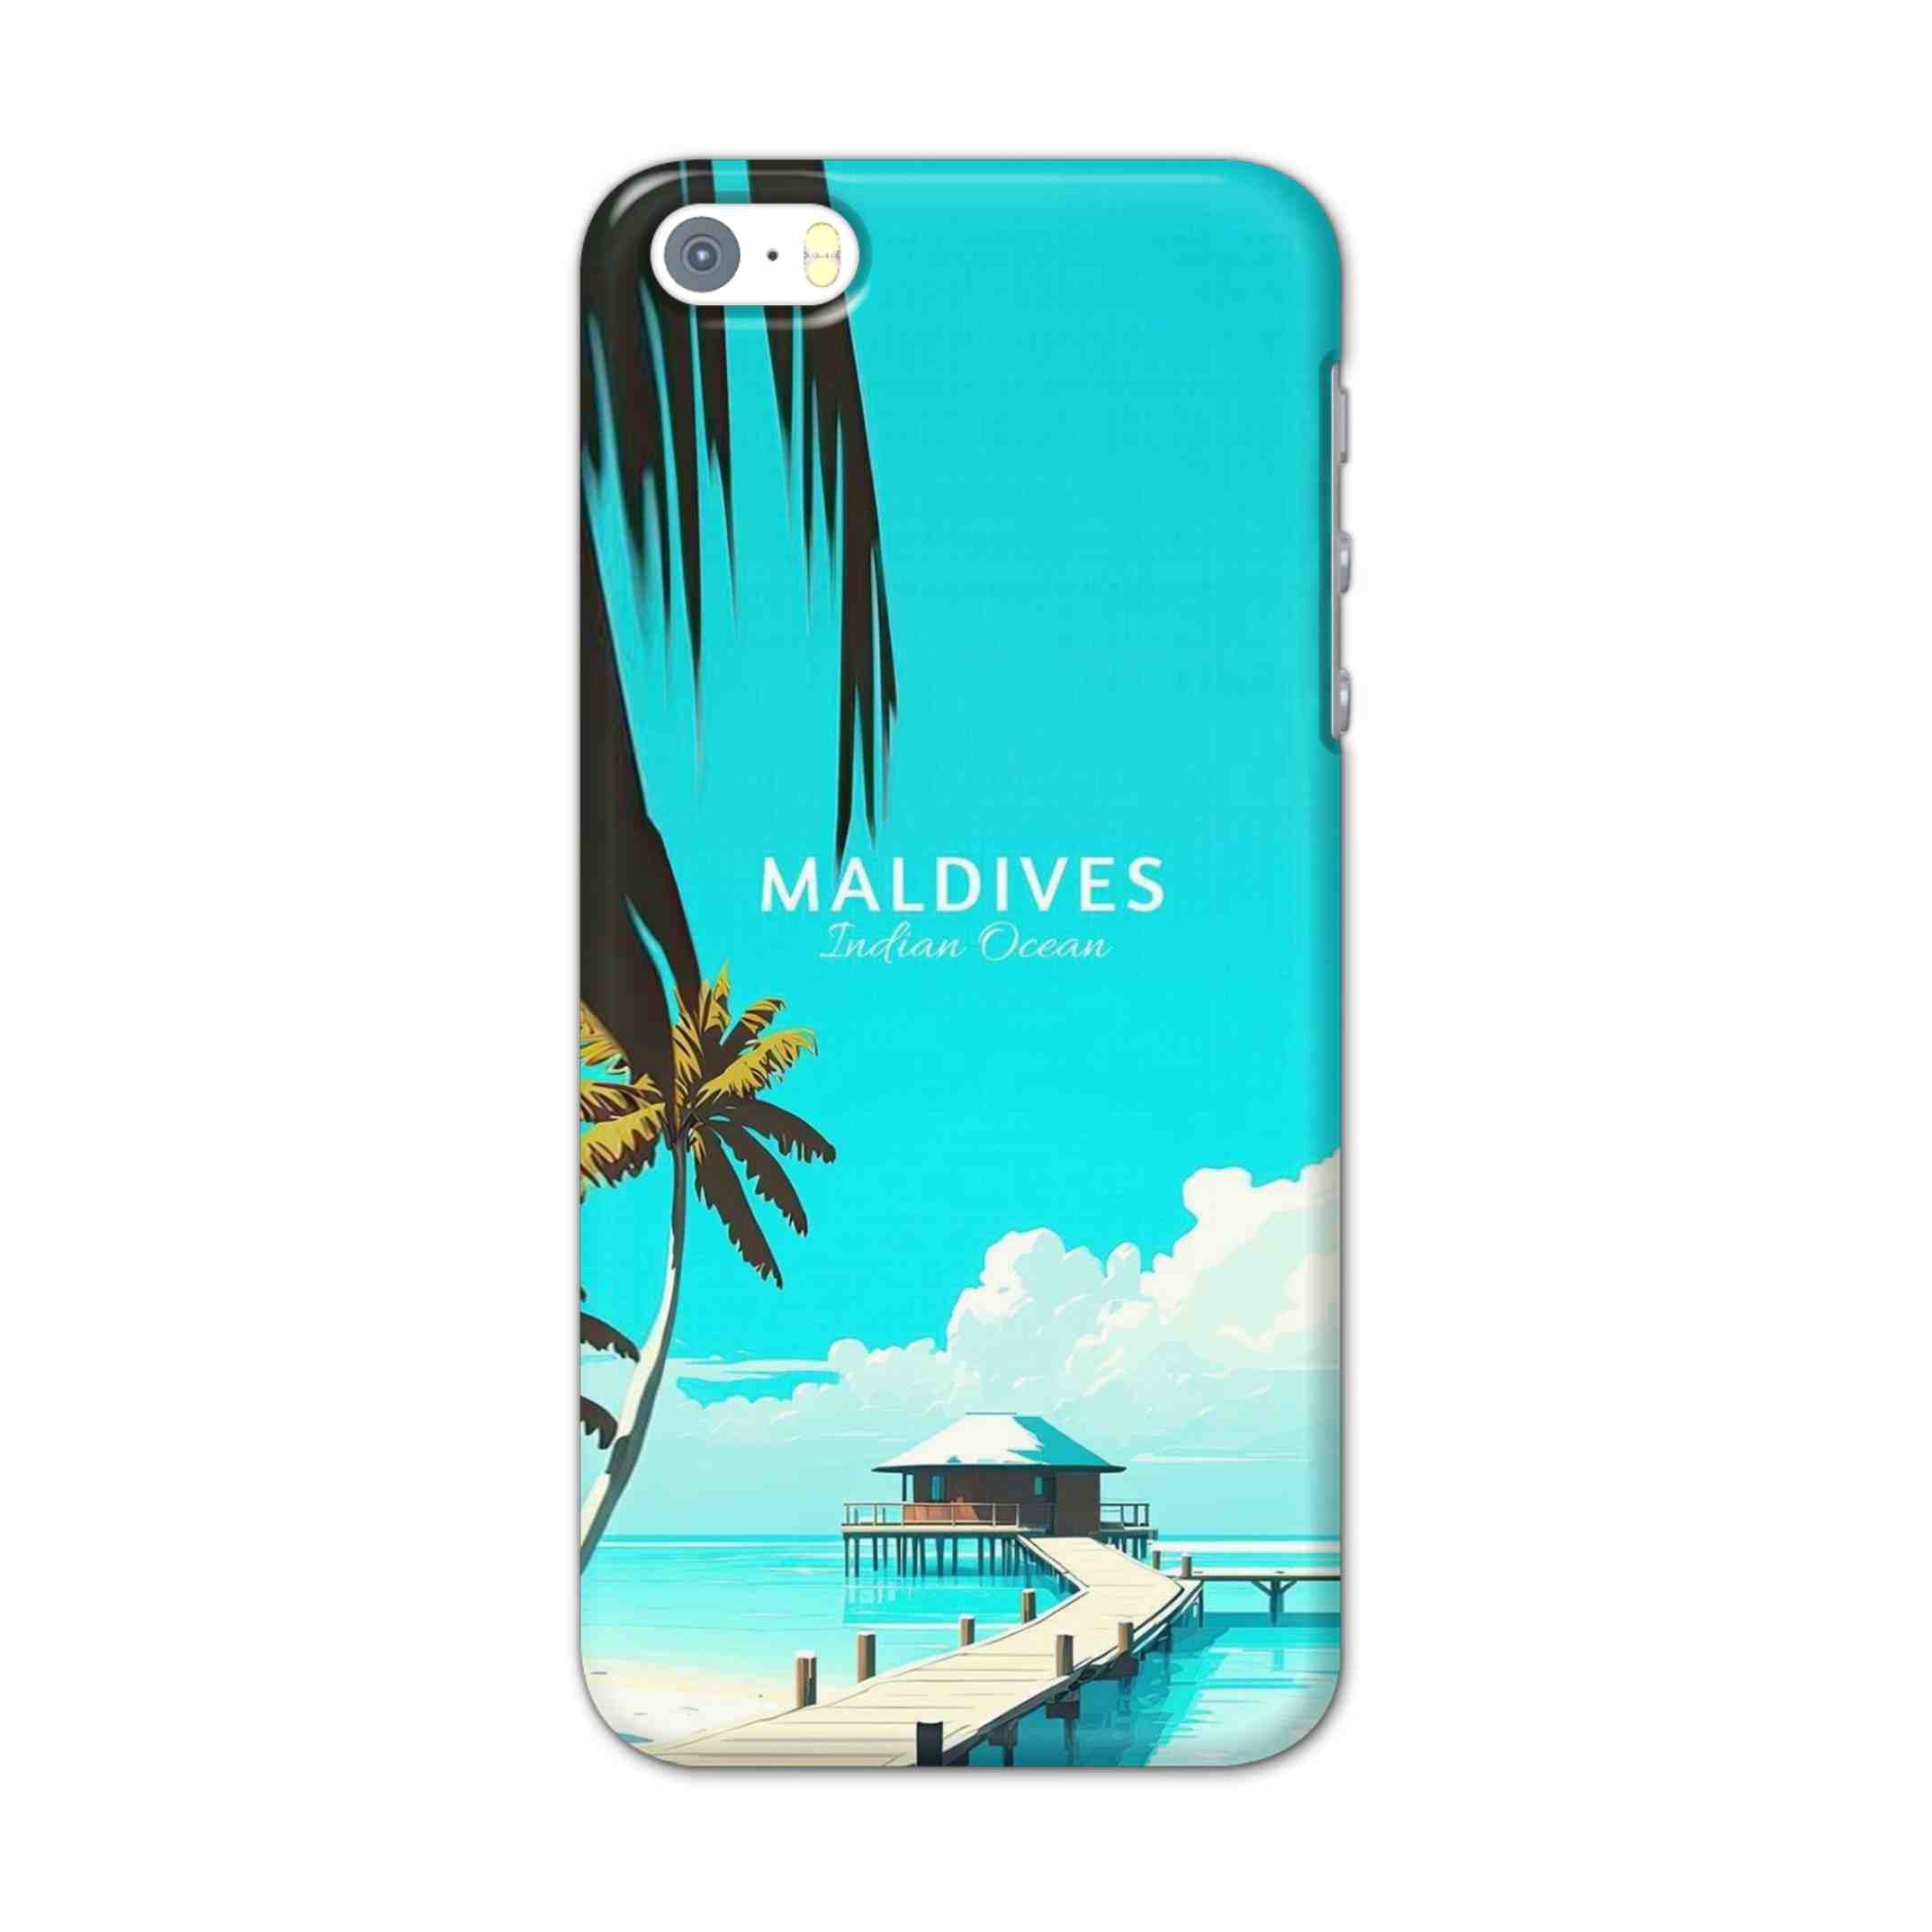 Buy Maldives Hard Back Mobile Phone Case/Cover For Apple Iphone SE Online